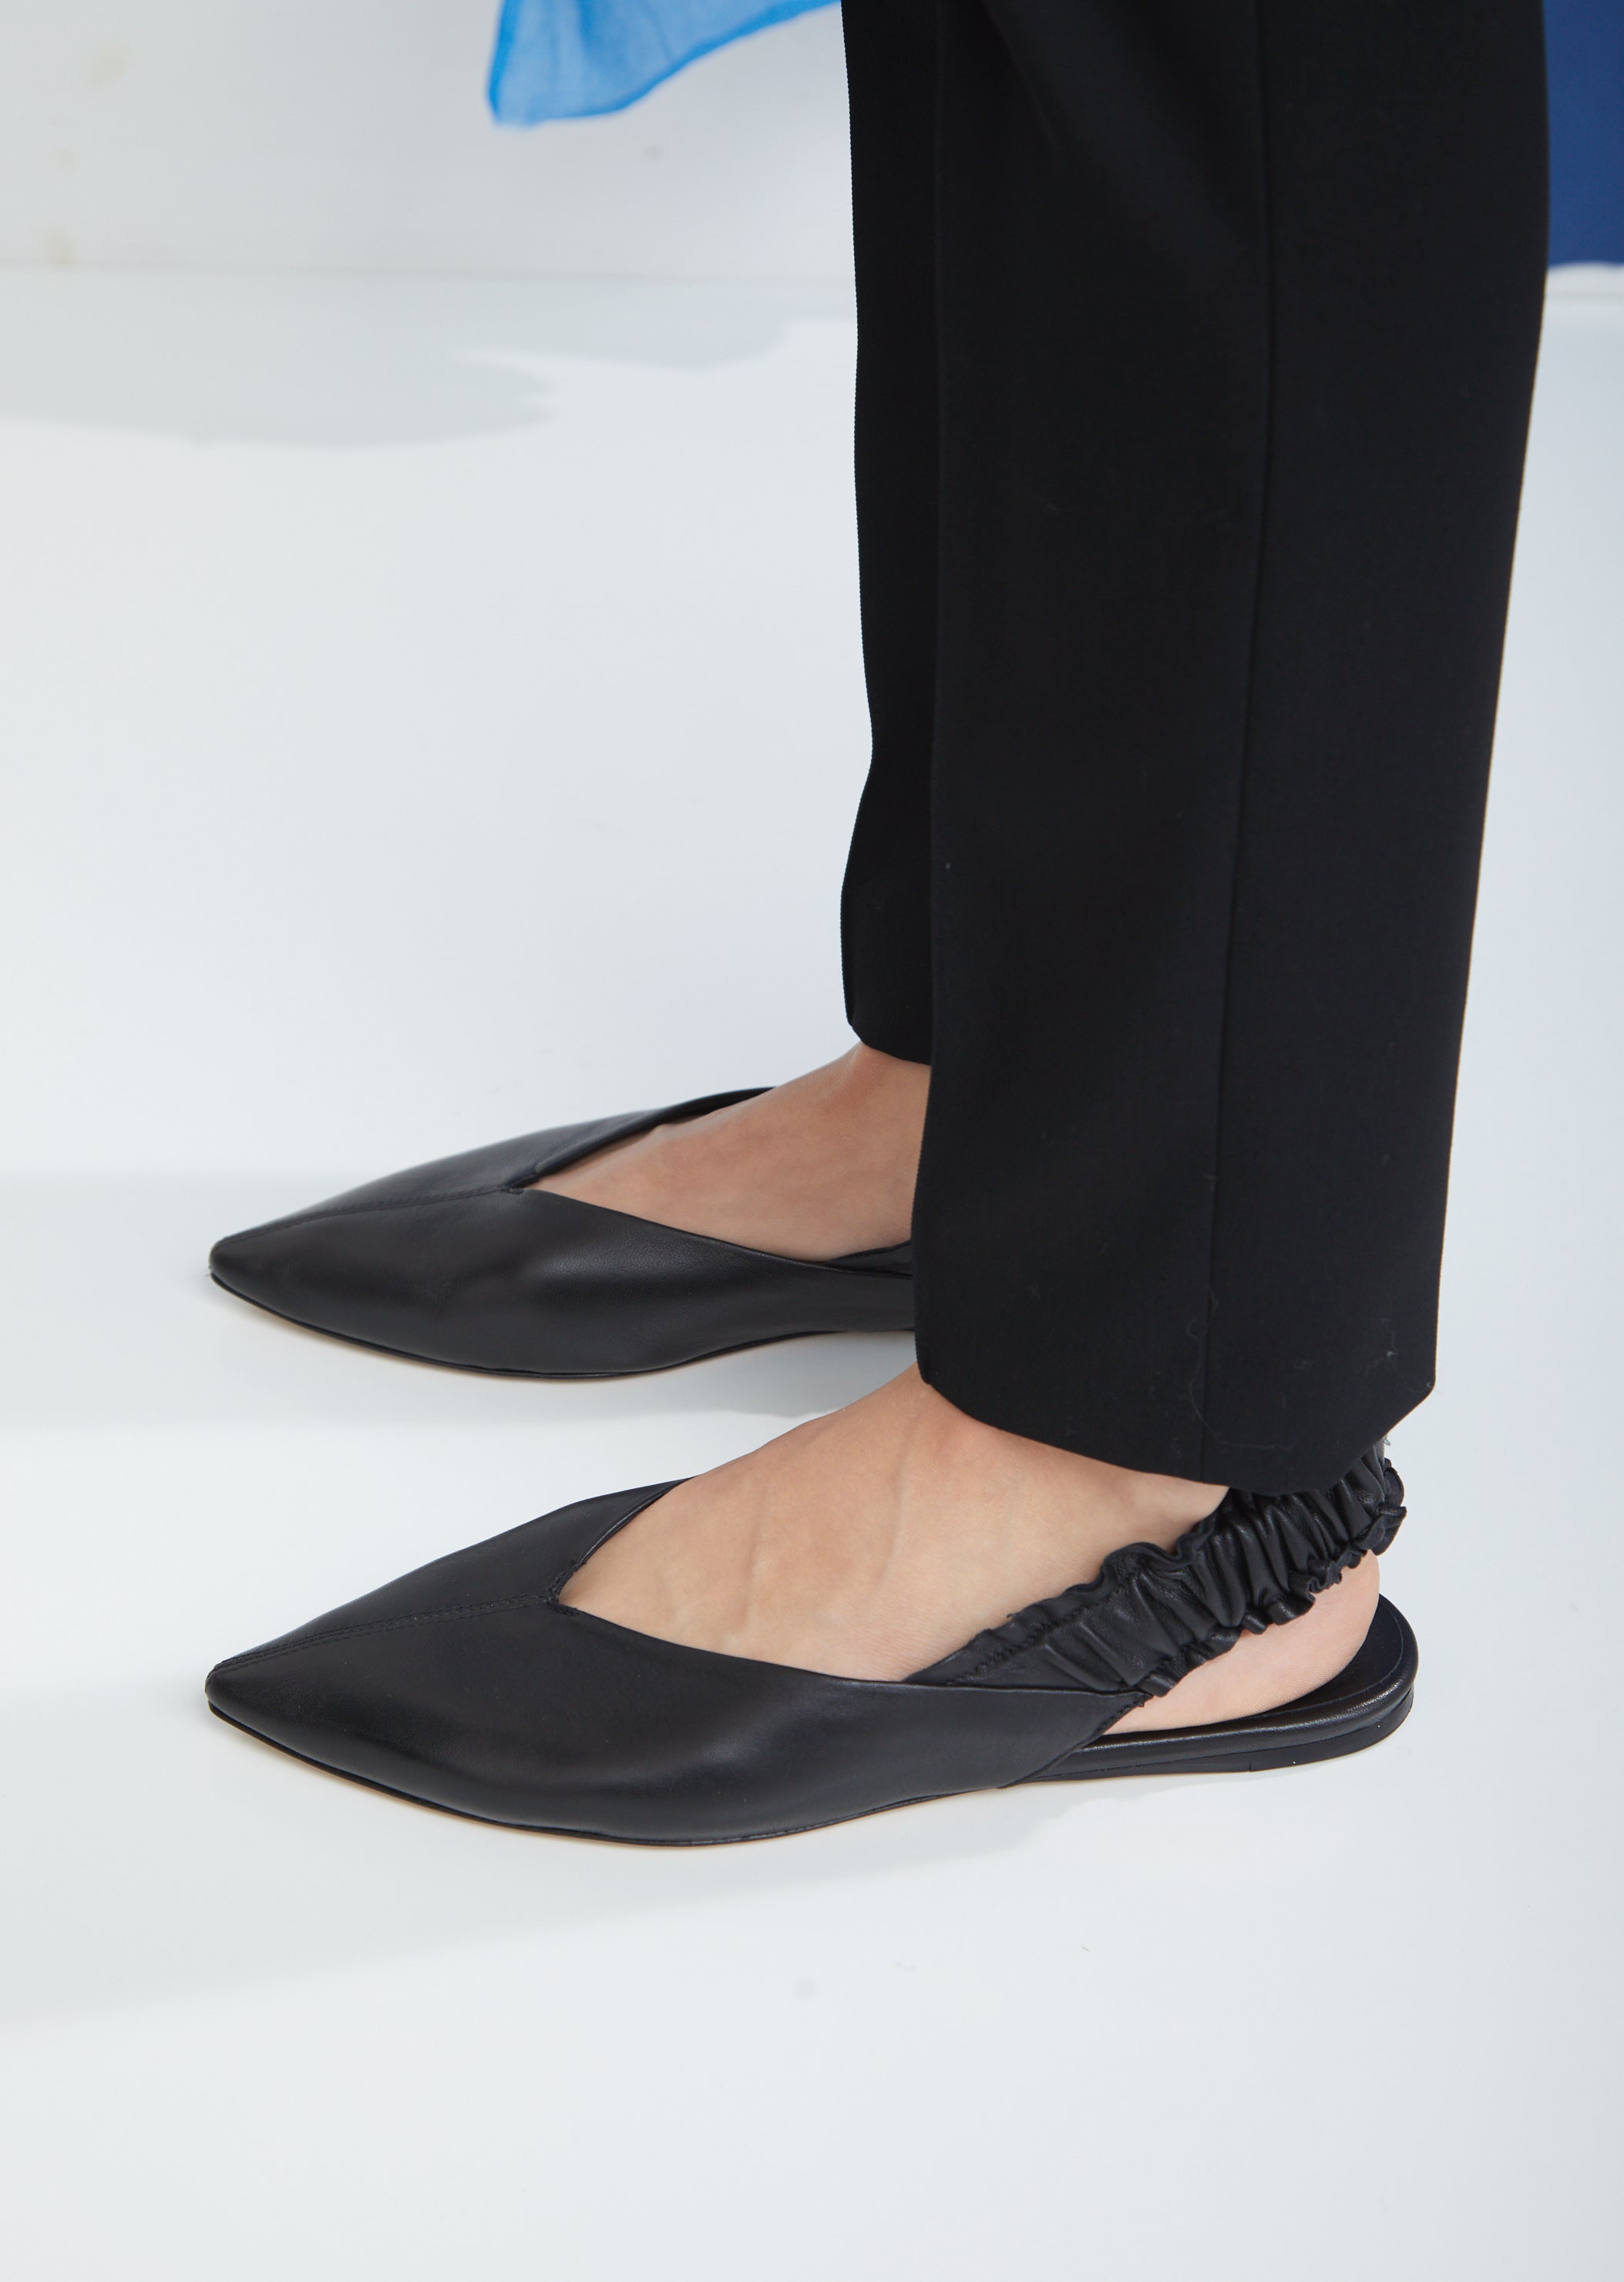 thin leather flip flops